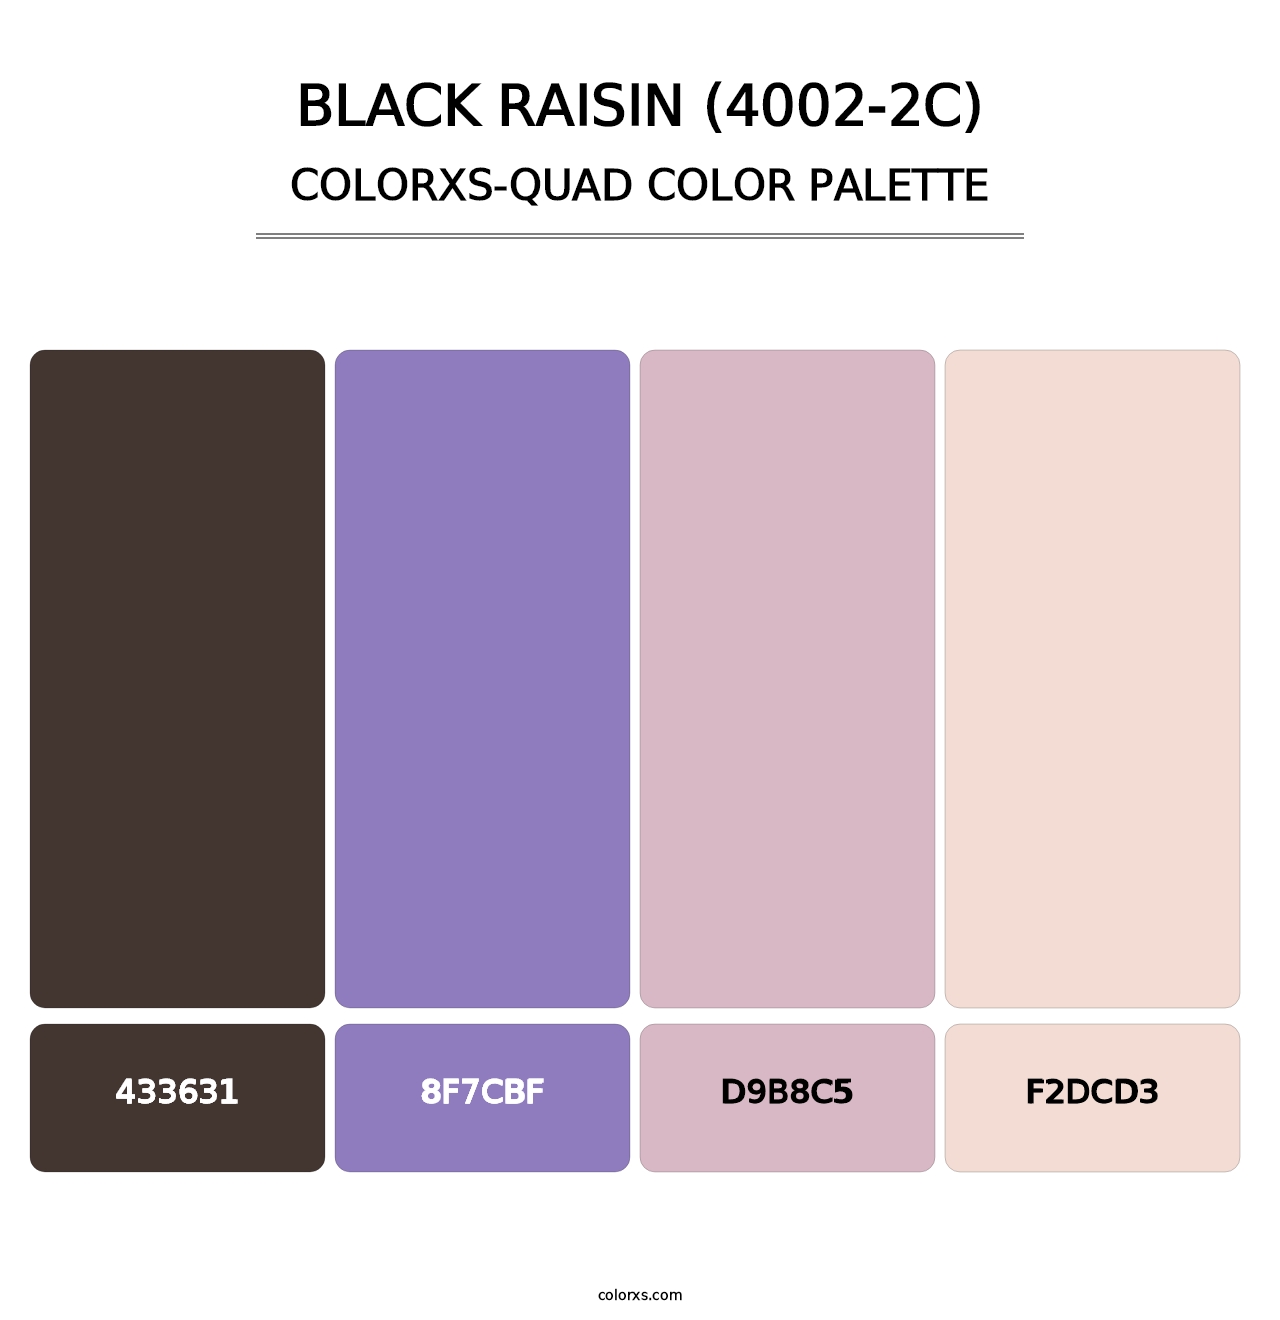 Black Raisin (4002-2C) - Colorxs Quad Palette